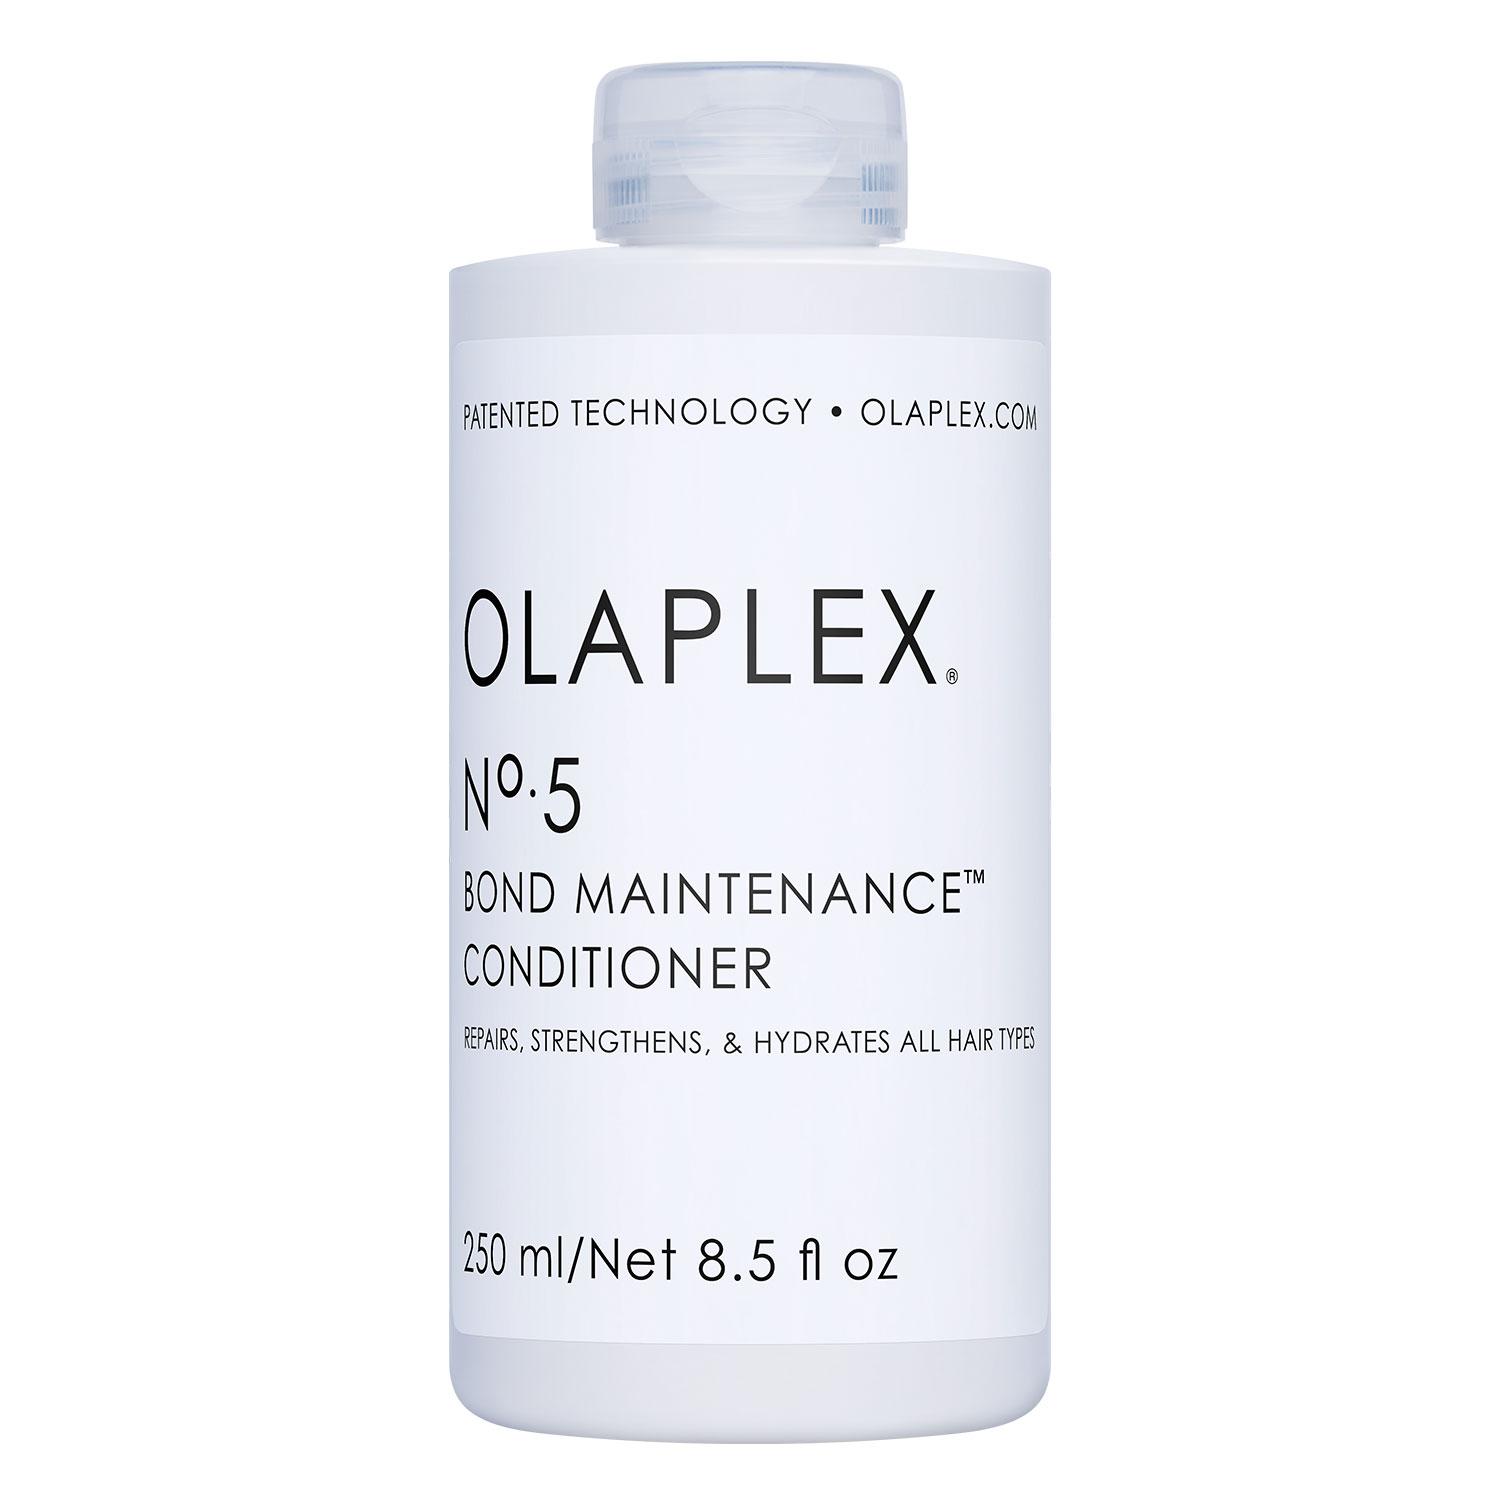 Olaplex - Bond Maintenance Conditioner No. 5